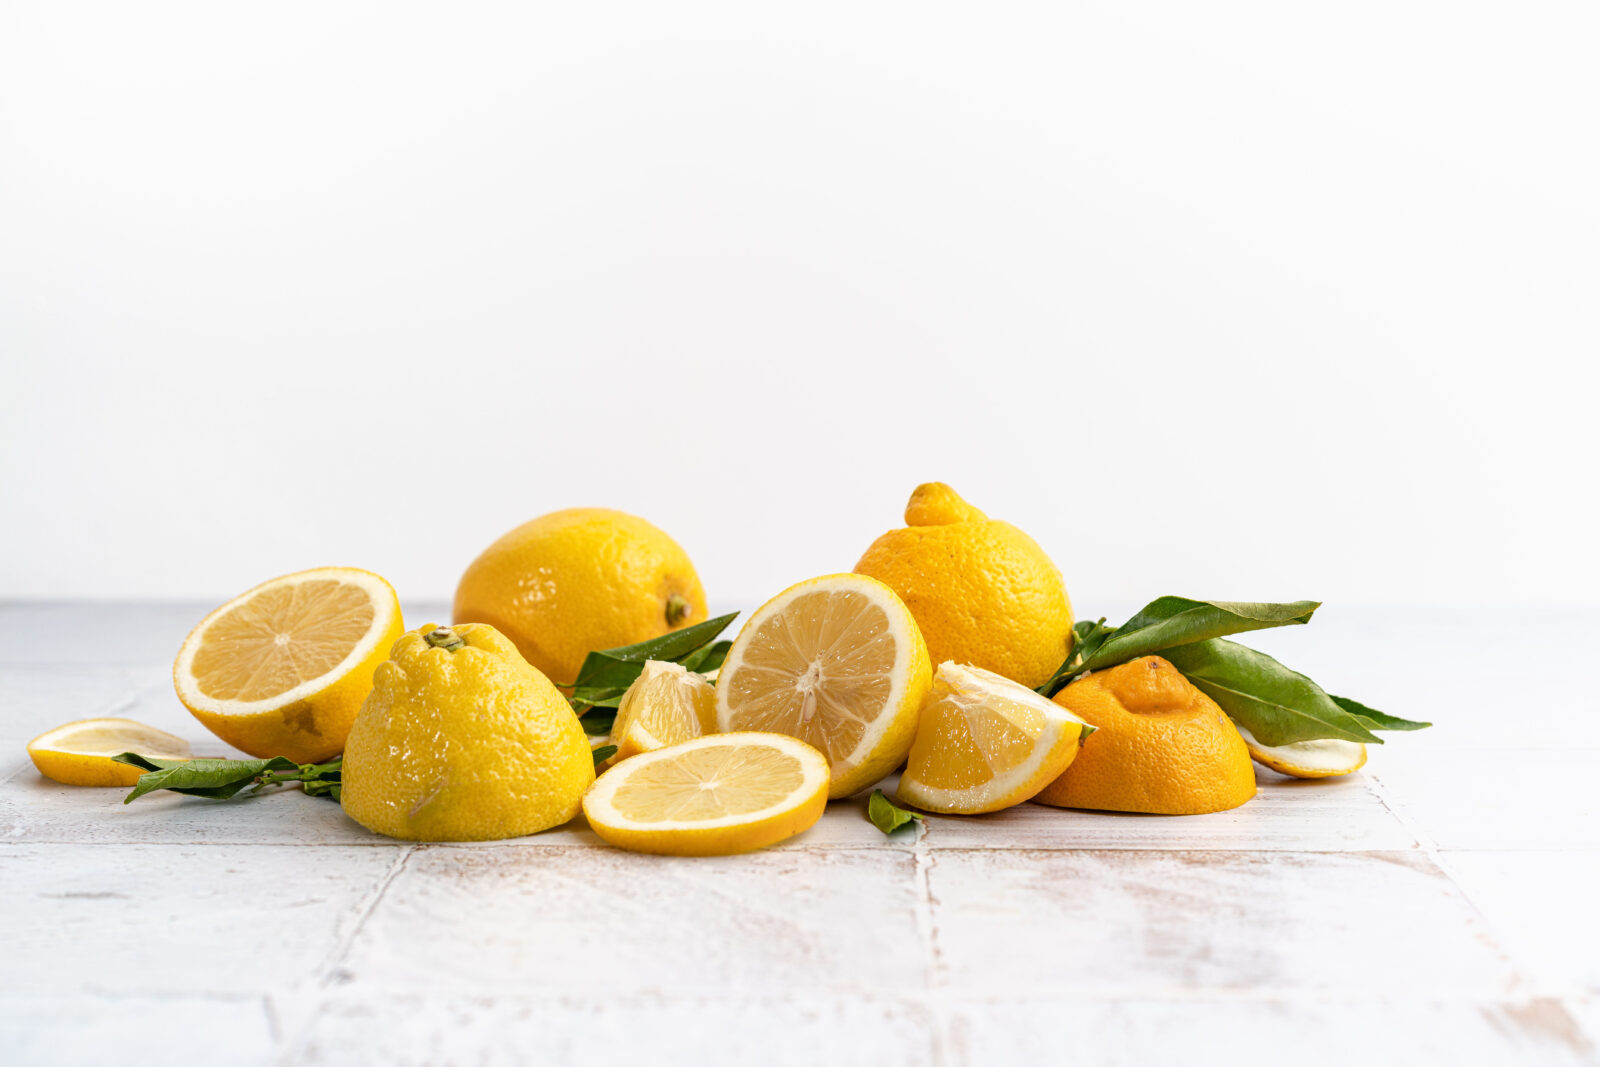 halved lemons with white surroundings